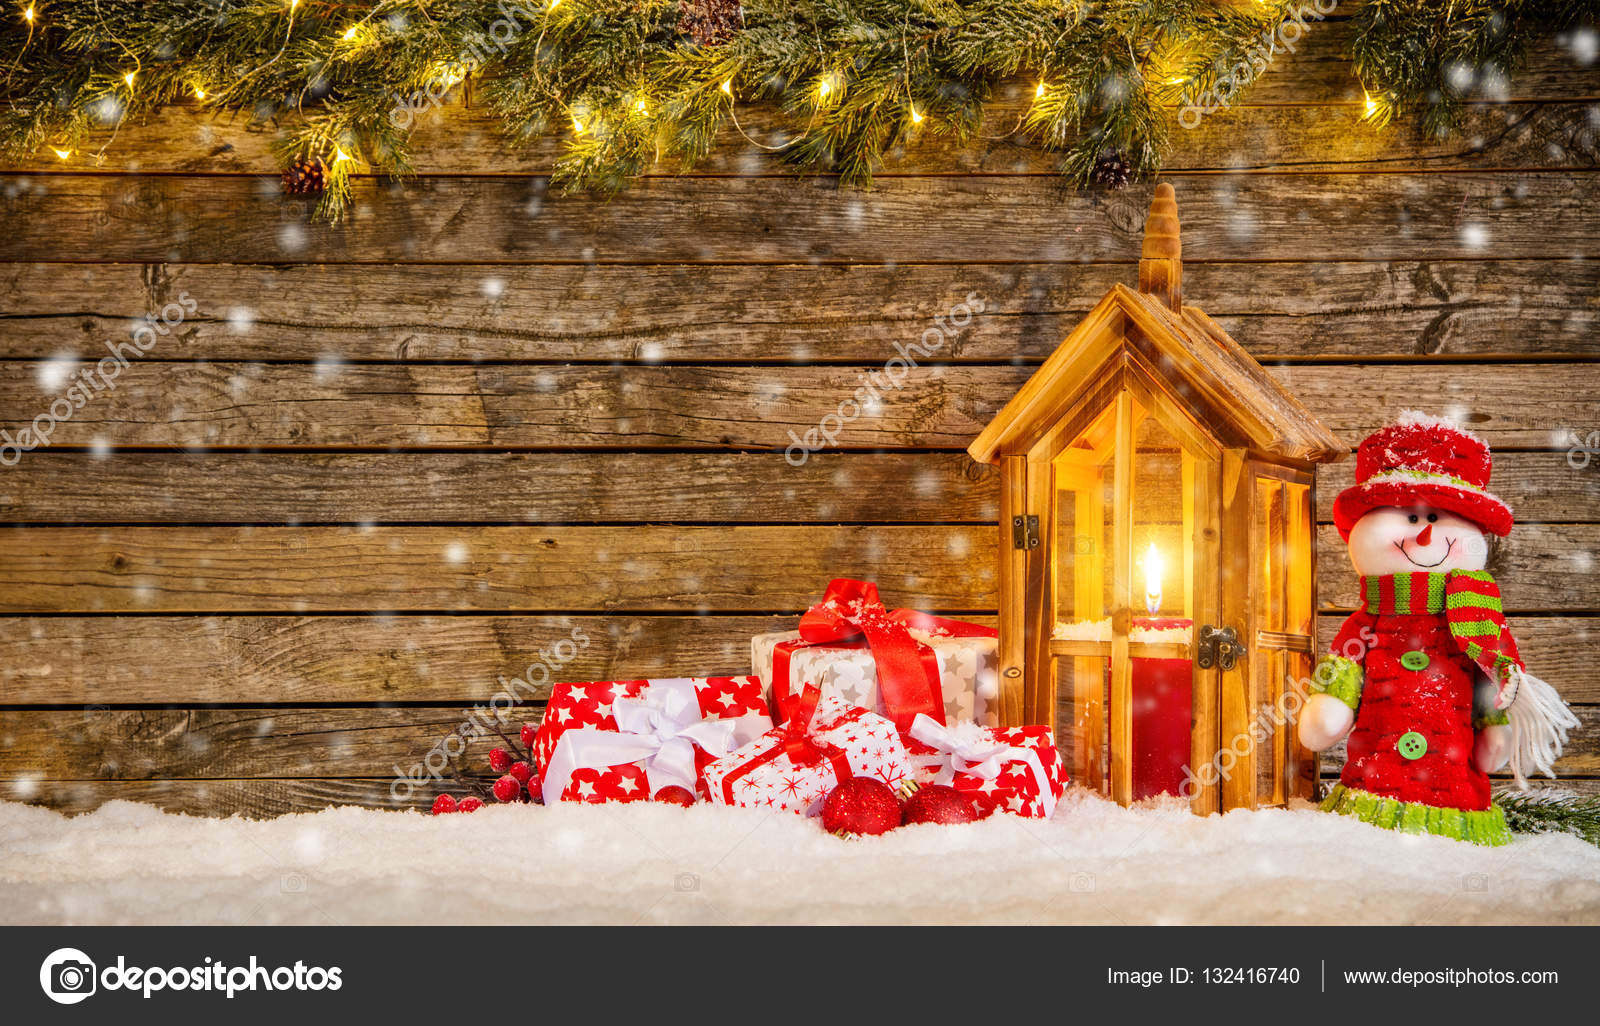 Sfondi Natalizi Lanterna.Christmas Background With Snowman And Lantern Stock Photo C Jag Cz 132416740